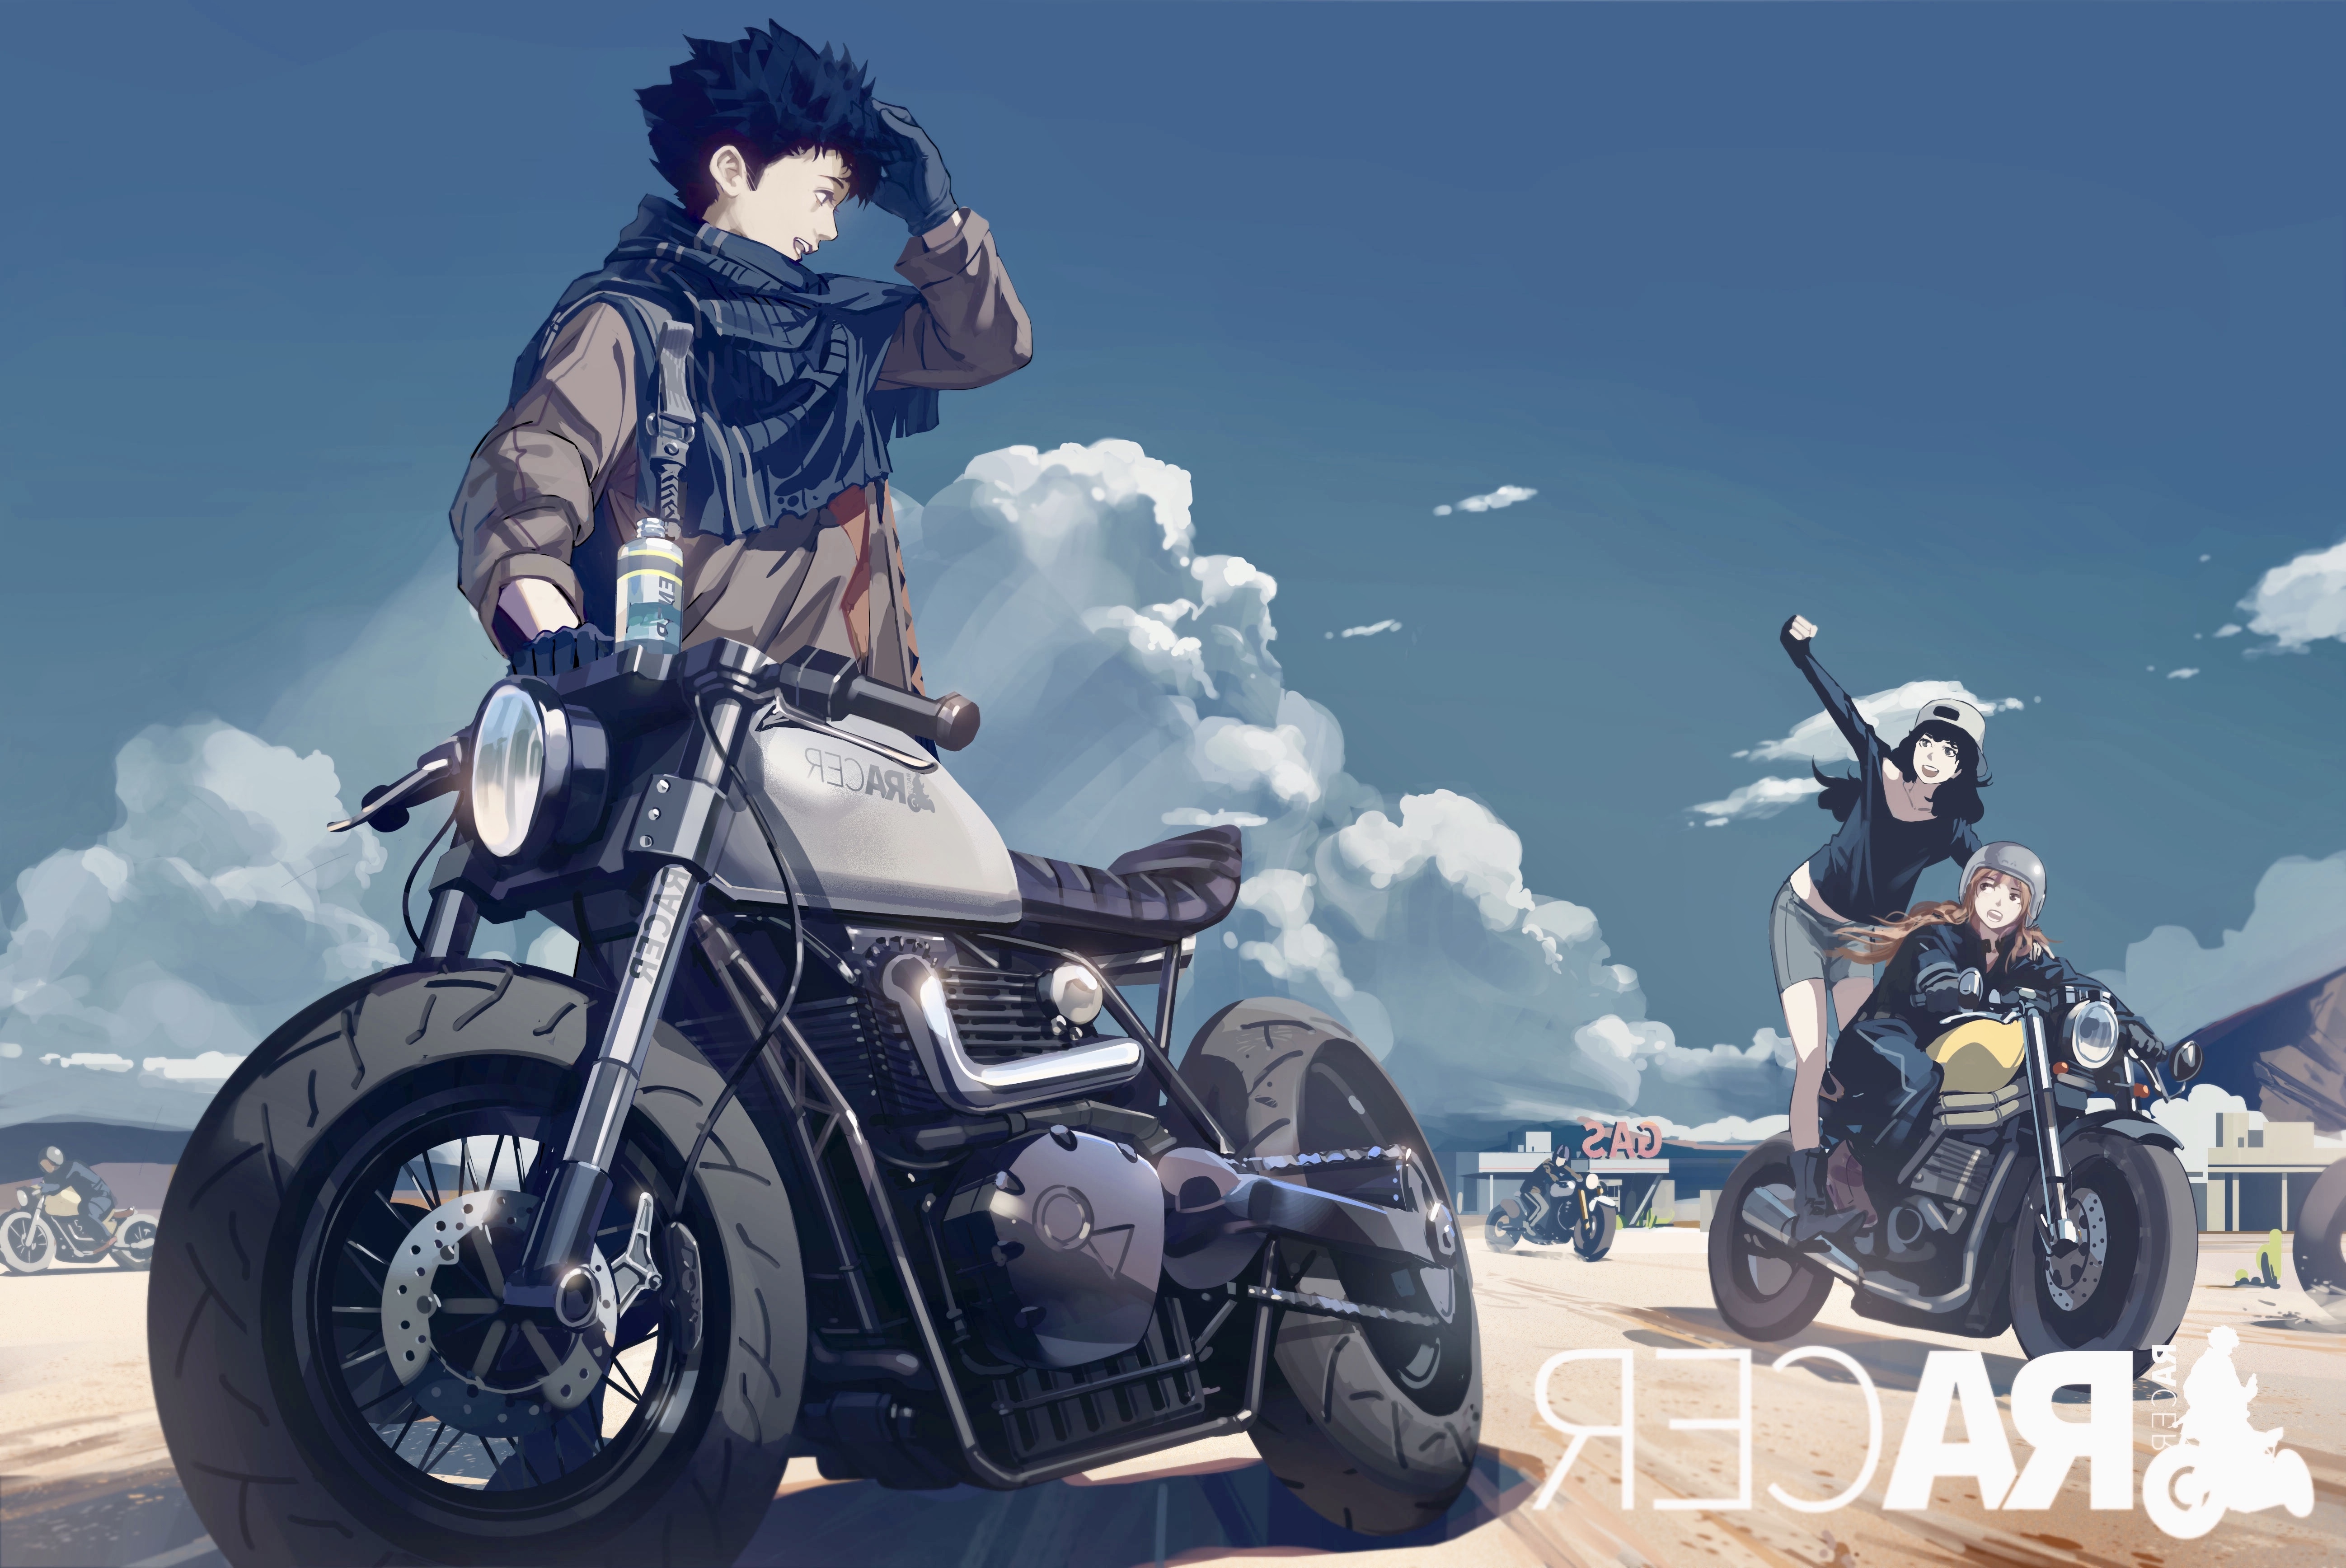 Wallpaper Motorcycle, Racer Friends, Anime Girls, Anime Boy:5192x3471